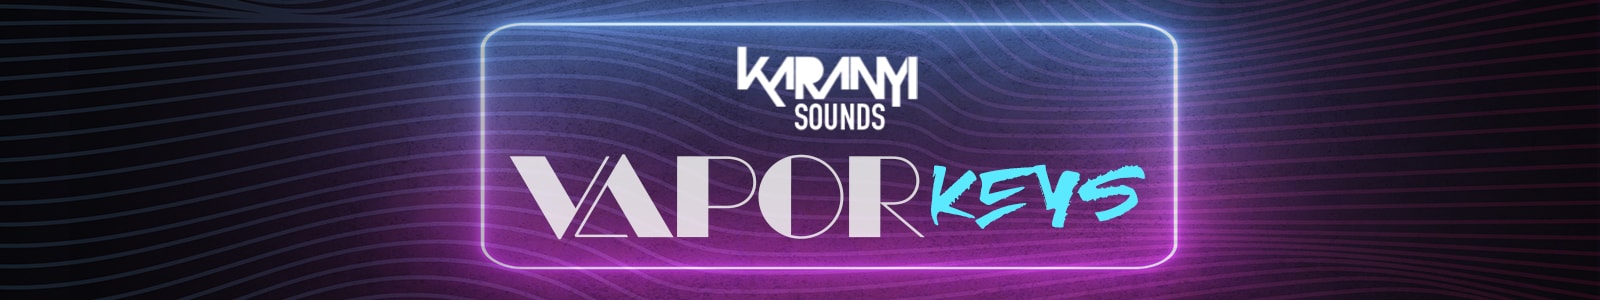 vapor keys by karanyi sound